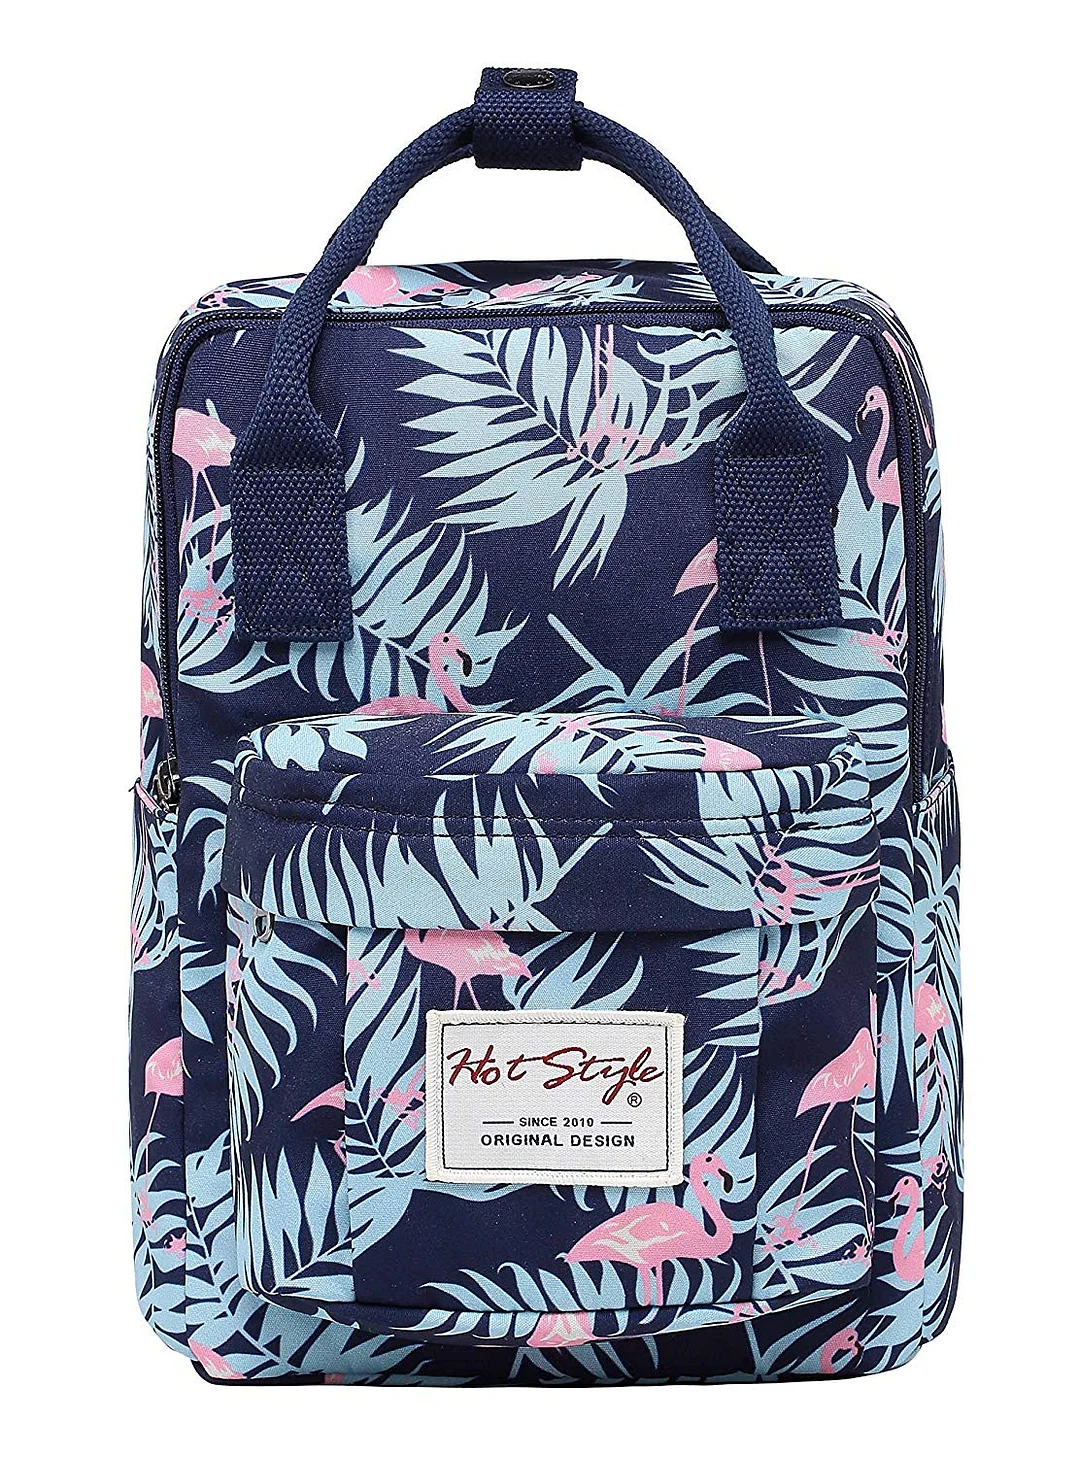 BESTIE 12" Small Backpack for Women, Girl's Cute Mini Bookbag Purse, Little Square Travel Bag, 11.8x8.3x4.7in